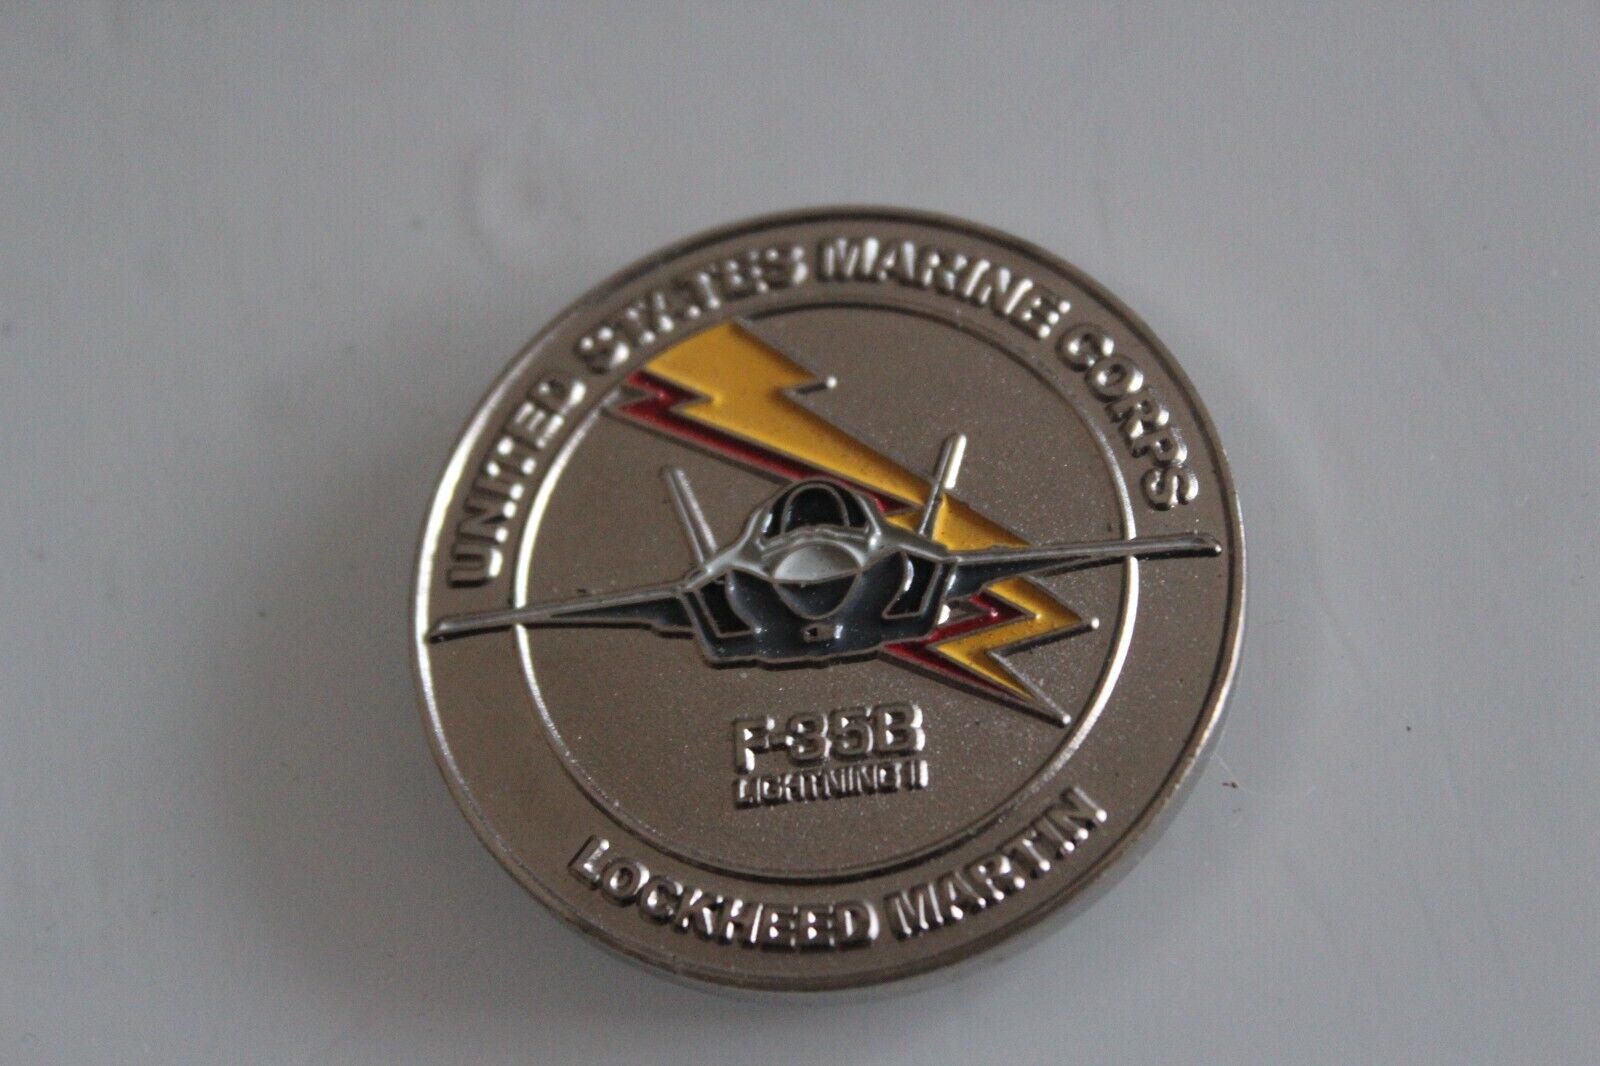 United States Marine Corps Lockheed Martin F-35B Lightning II Challenge Coin